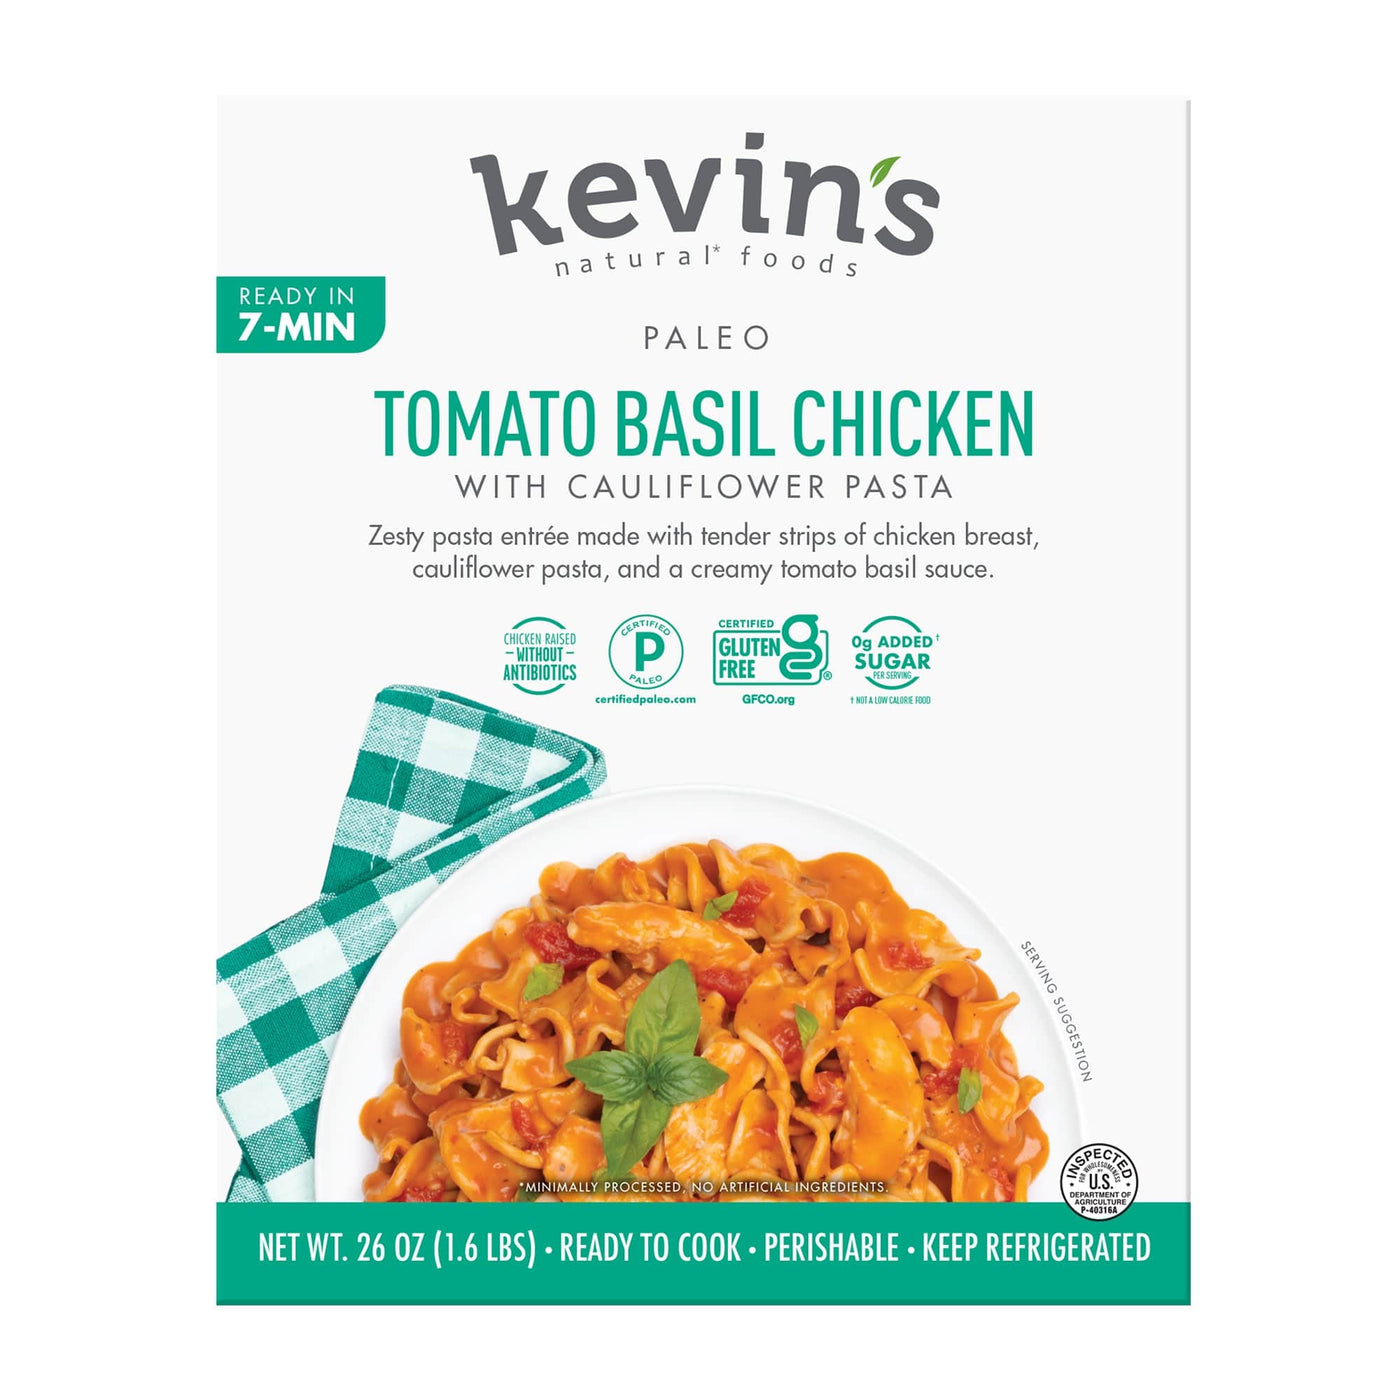 Tomato Basil Chicken with Cauliflower Pasta